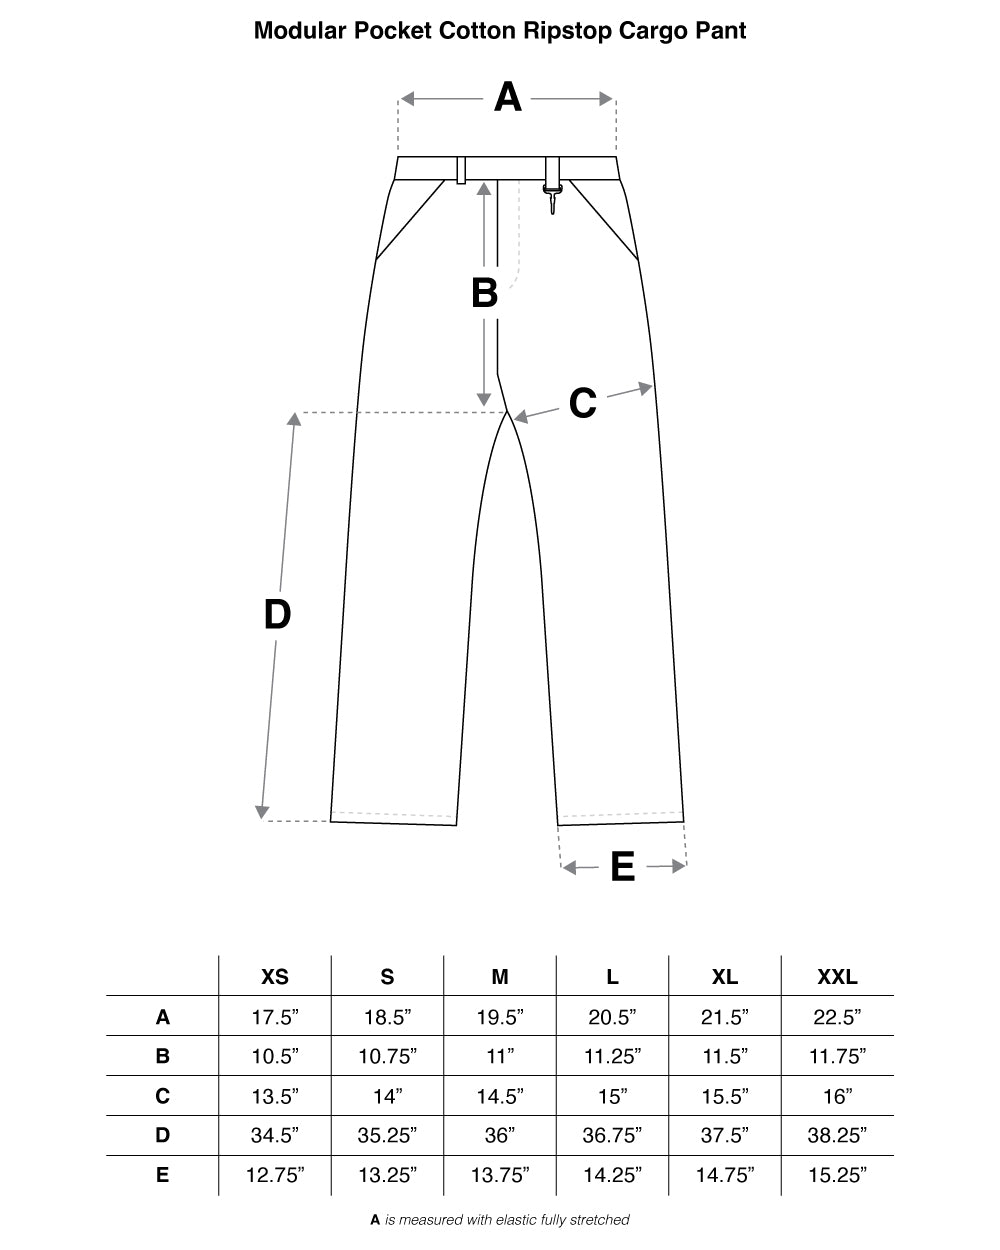 Modular Pocket Cotton Ripstop Cargo Pant in Sage Size Guide